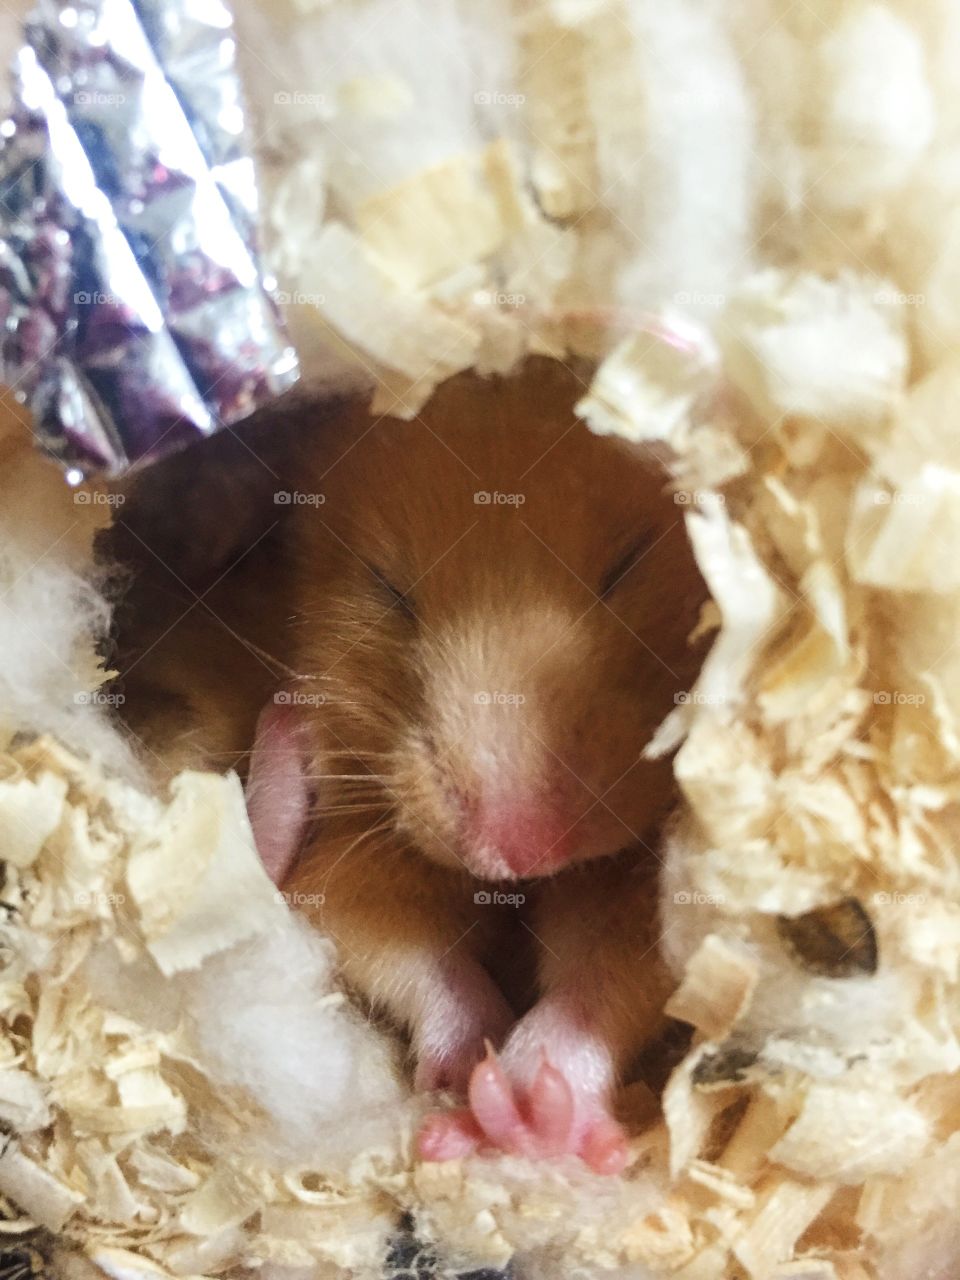 my little hamster sleeping